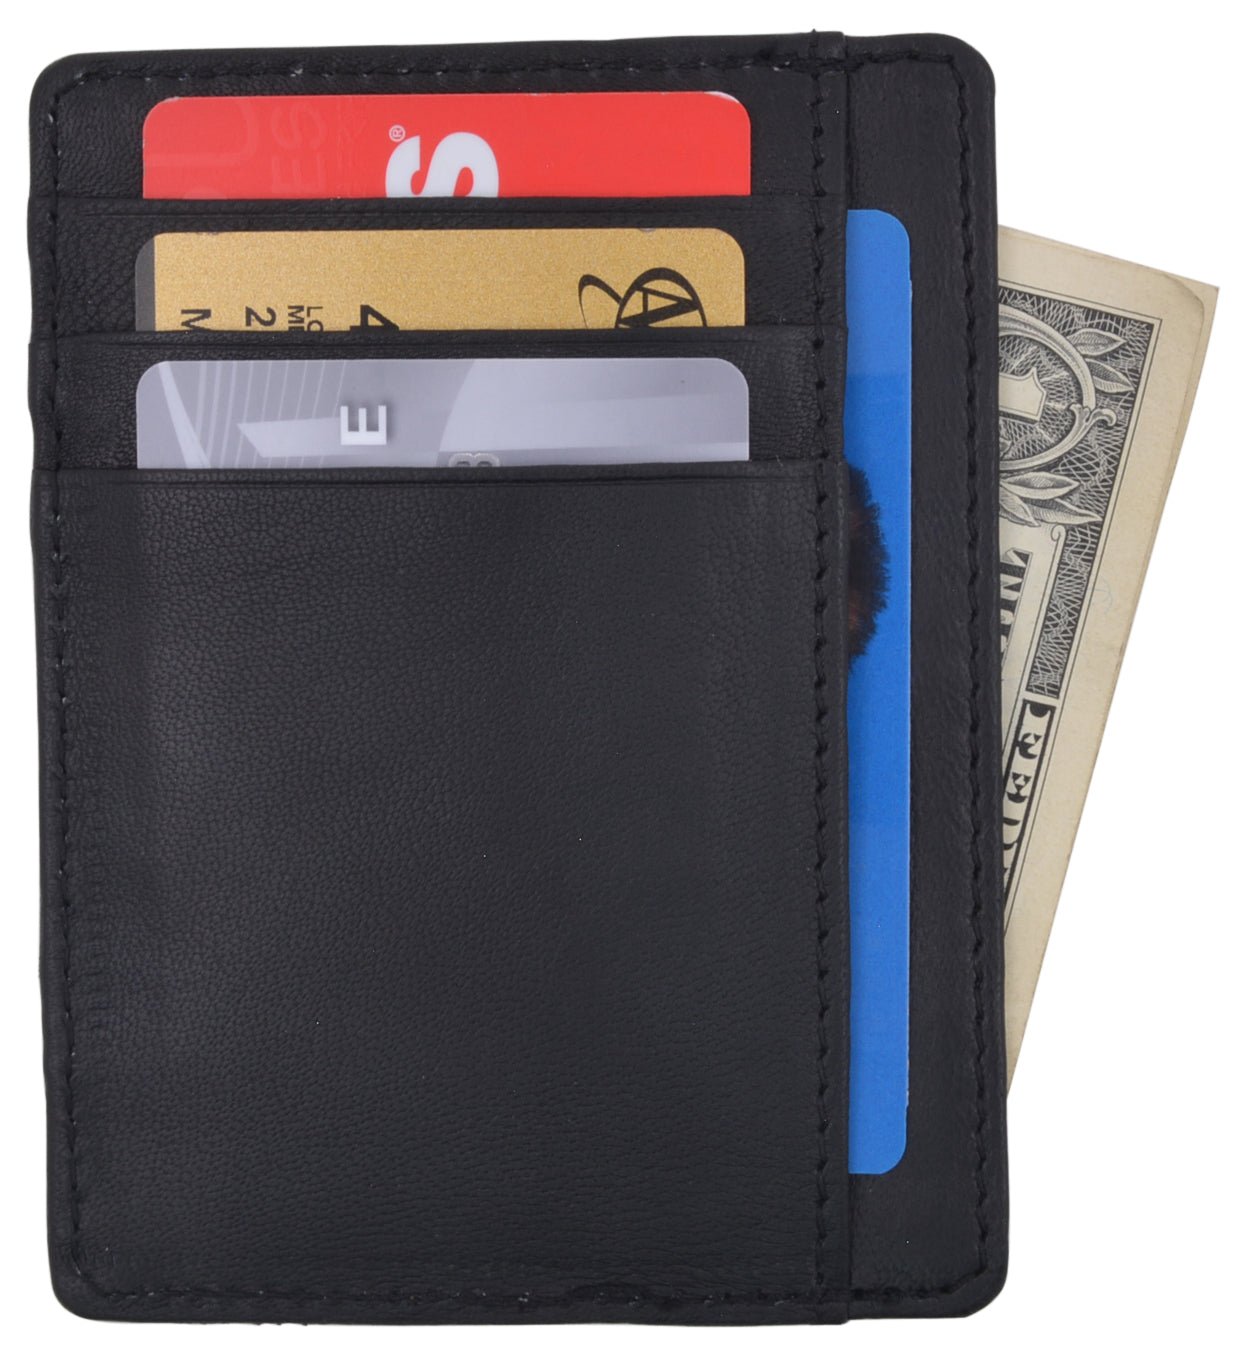 Marshal Wallet Slim Minimalist Wallets for Men Women - Leather Front Pocket Thin Mens Wallet RFID Credit Card Holder Gifts for Men, Adult Unisex, Size